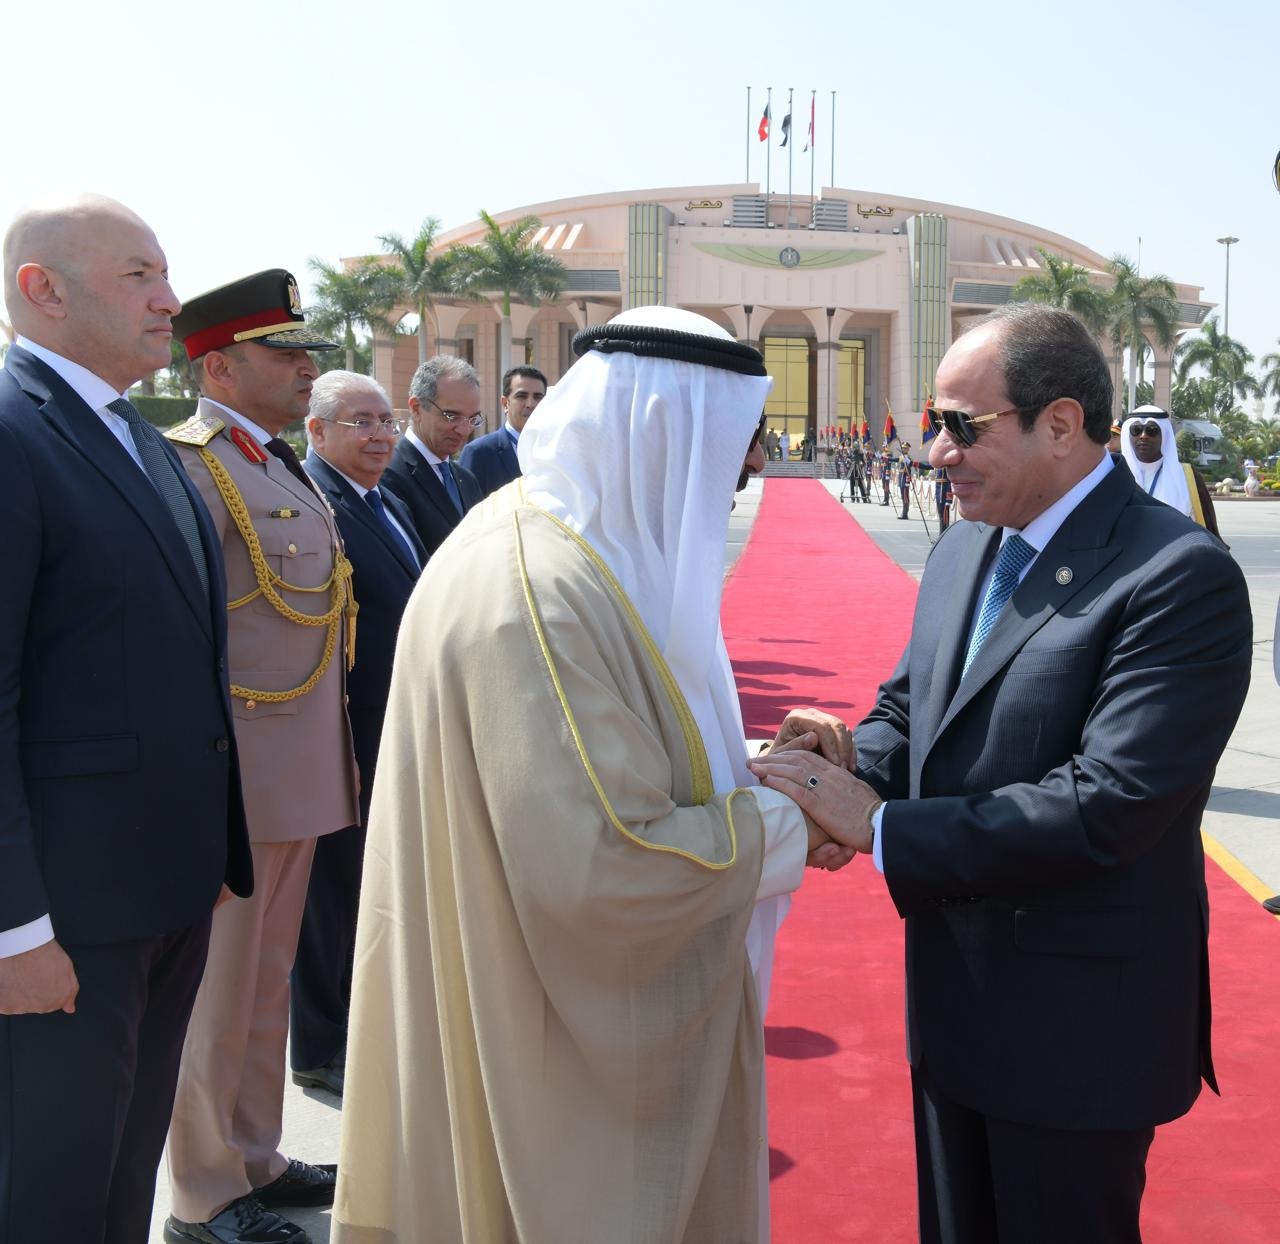 President Sisi bids farewell to the Emir of Kuwait at Cairo International Airport